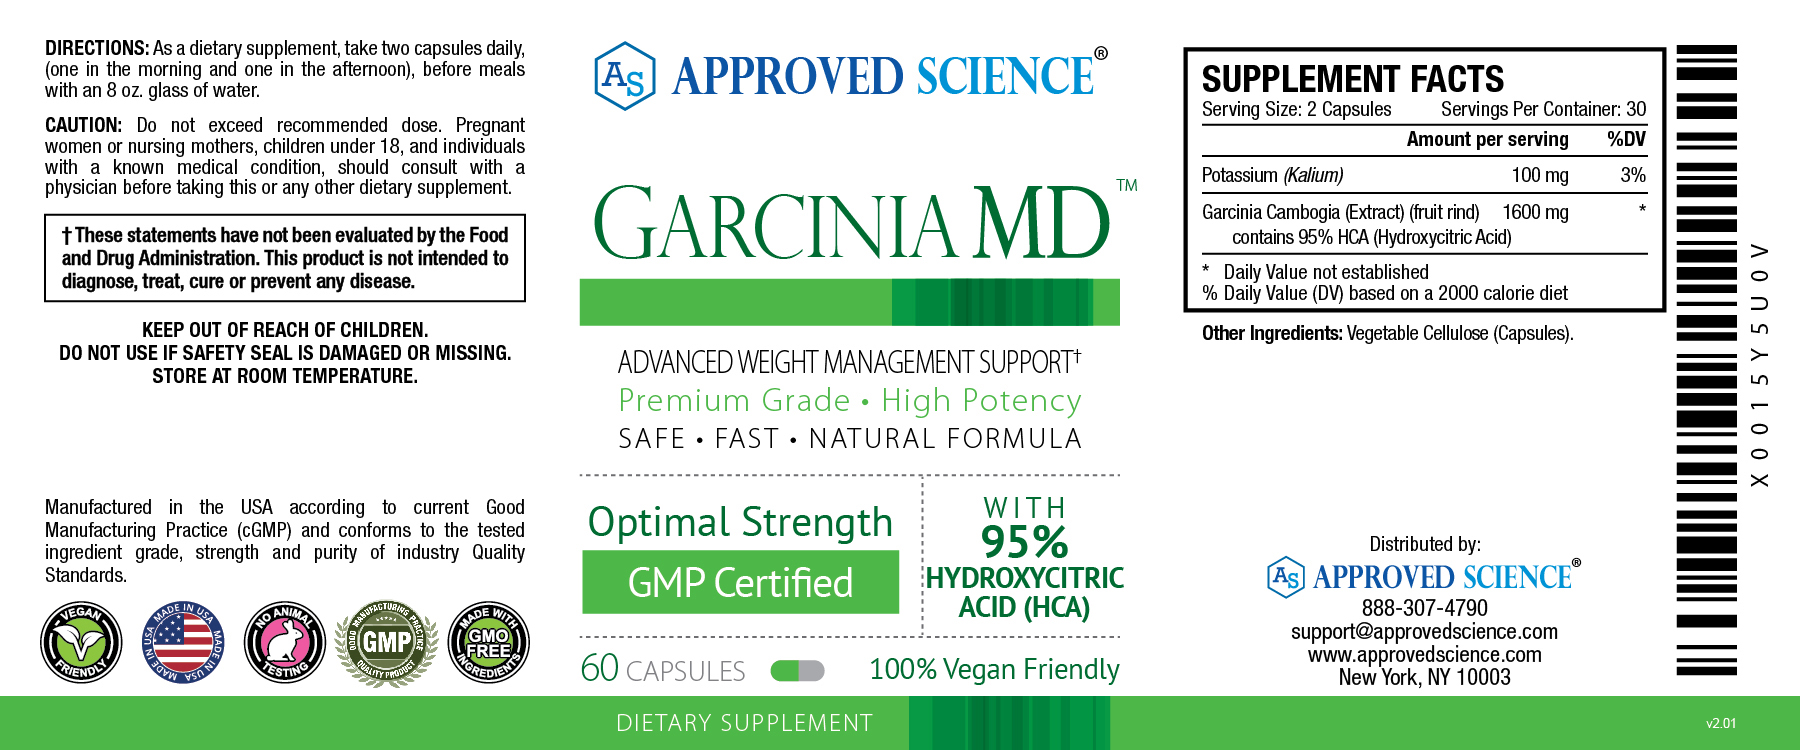 Garcinia MD™ Supplement Facts